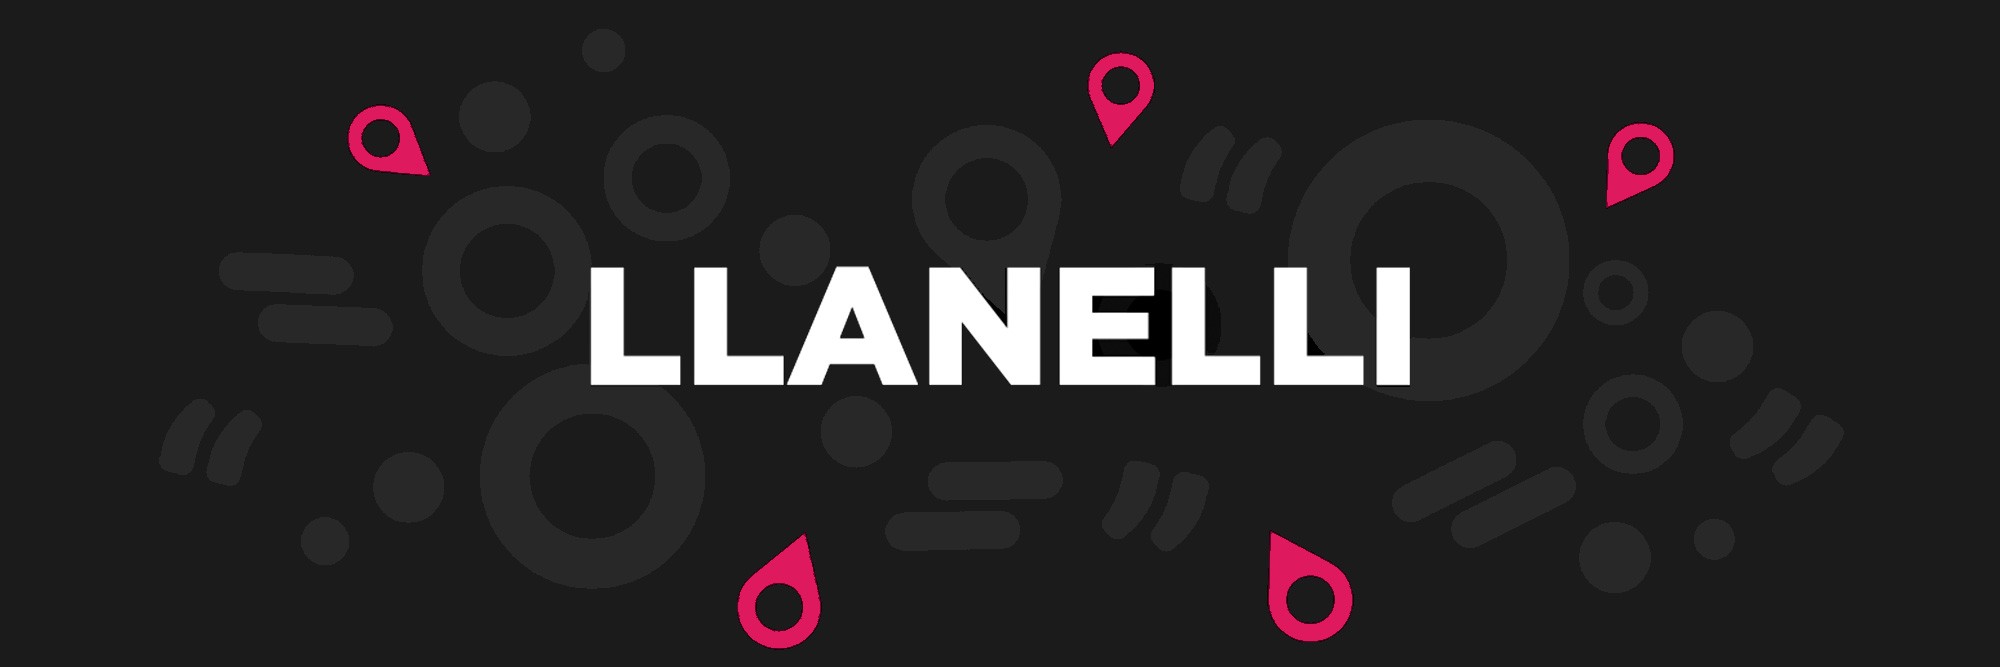 Llanelli-banner